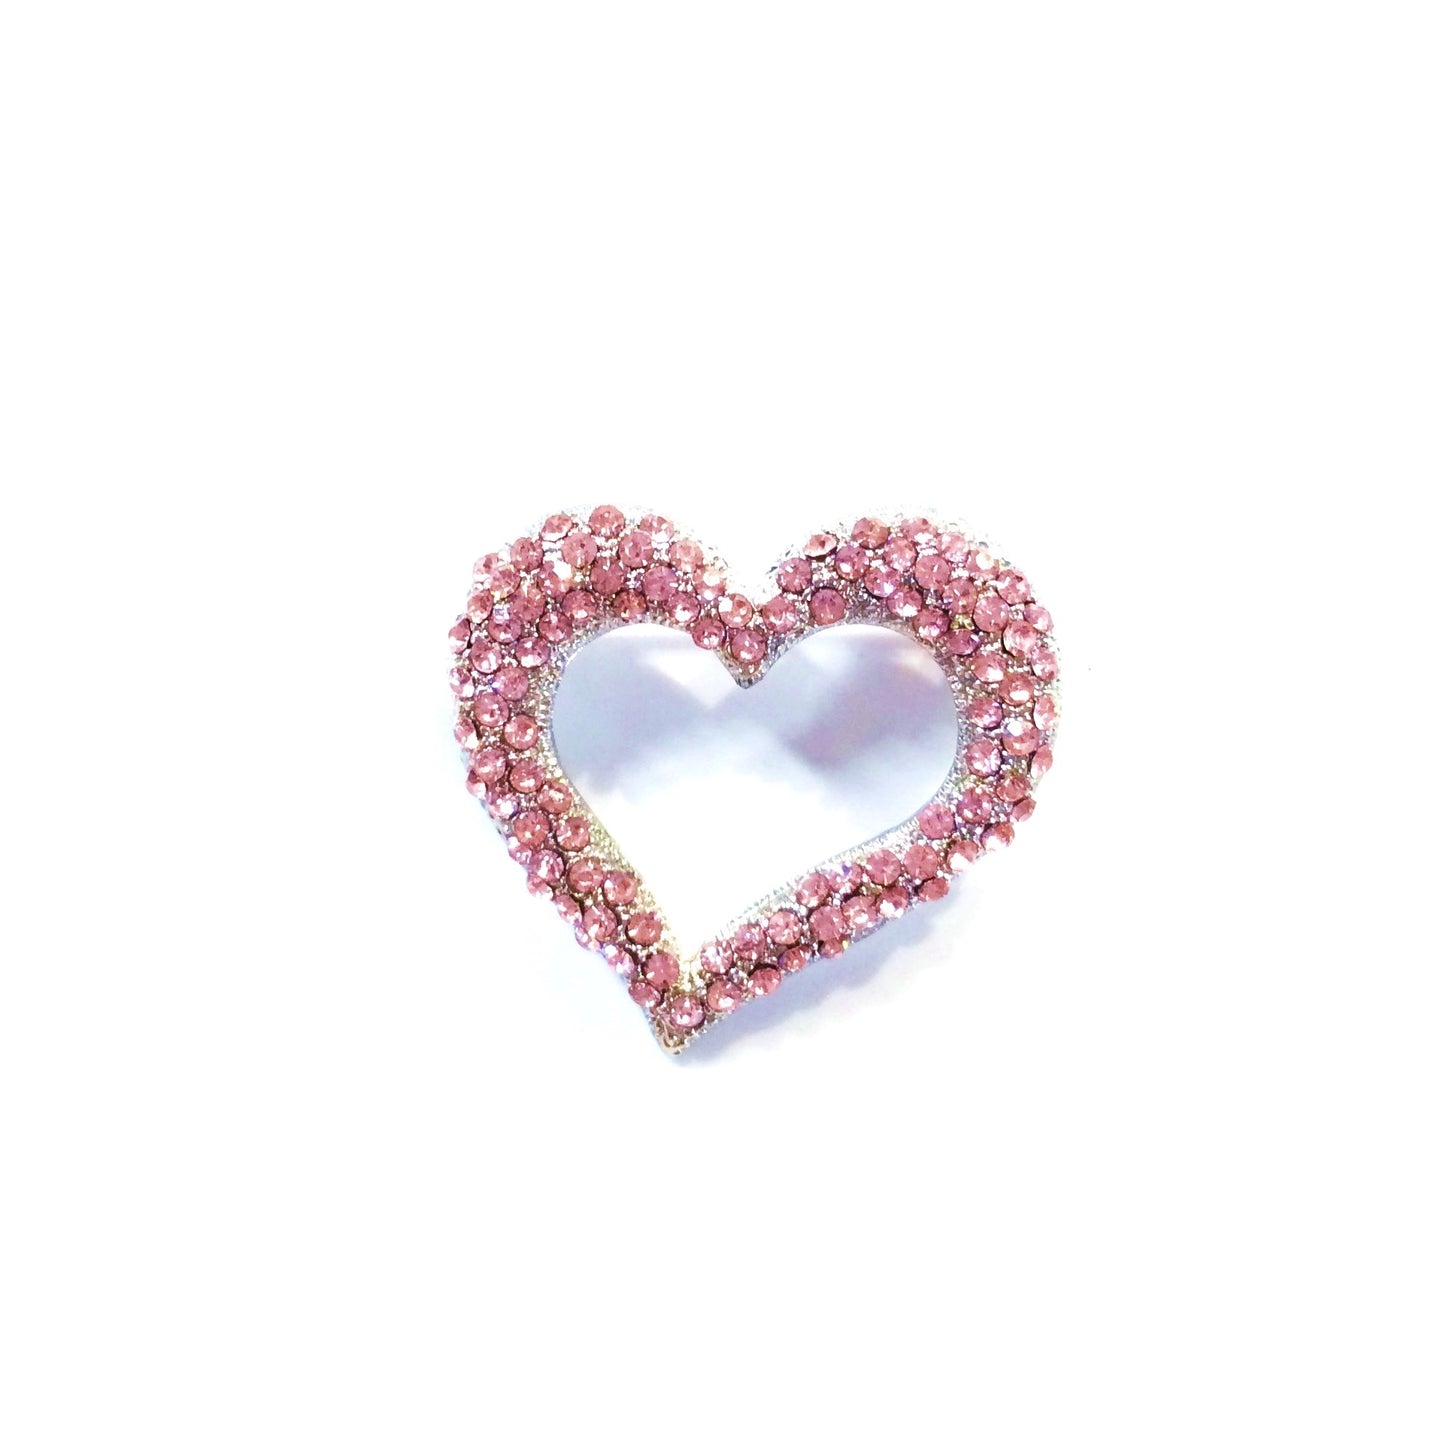 Heart Pin #66-69091PK (Pink)